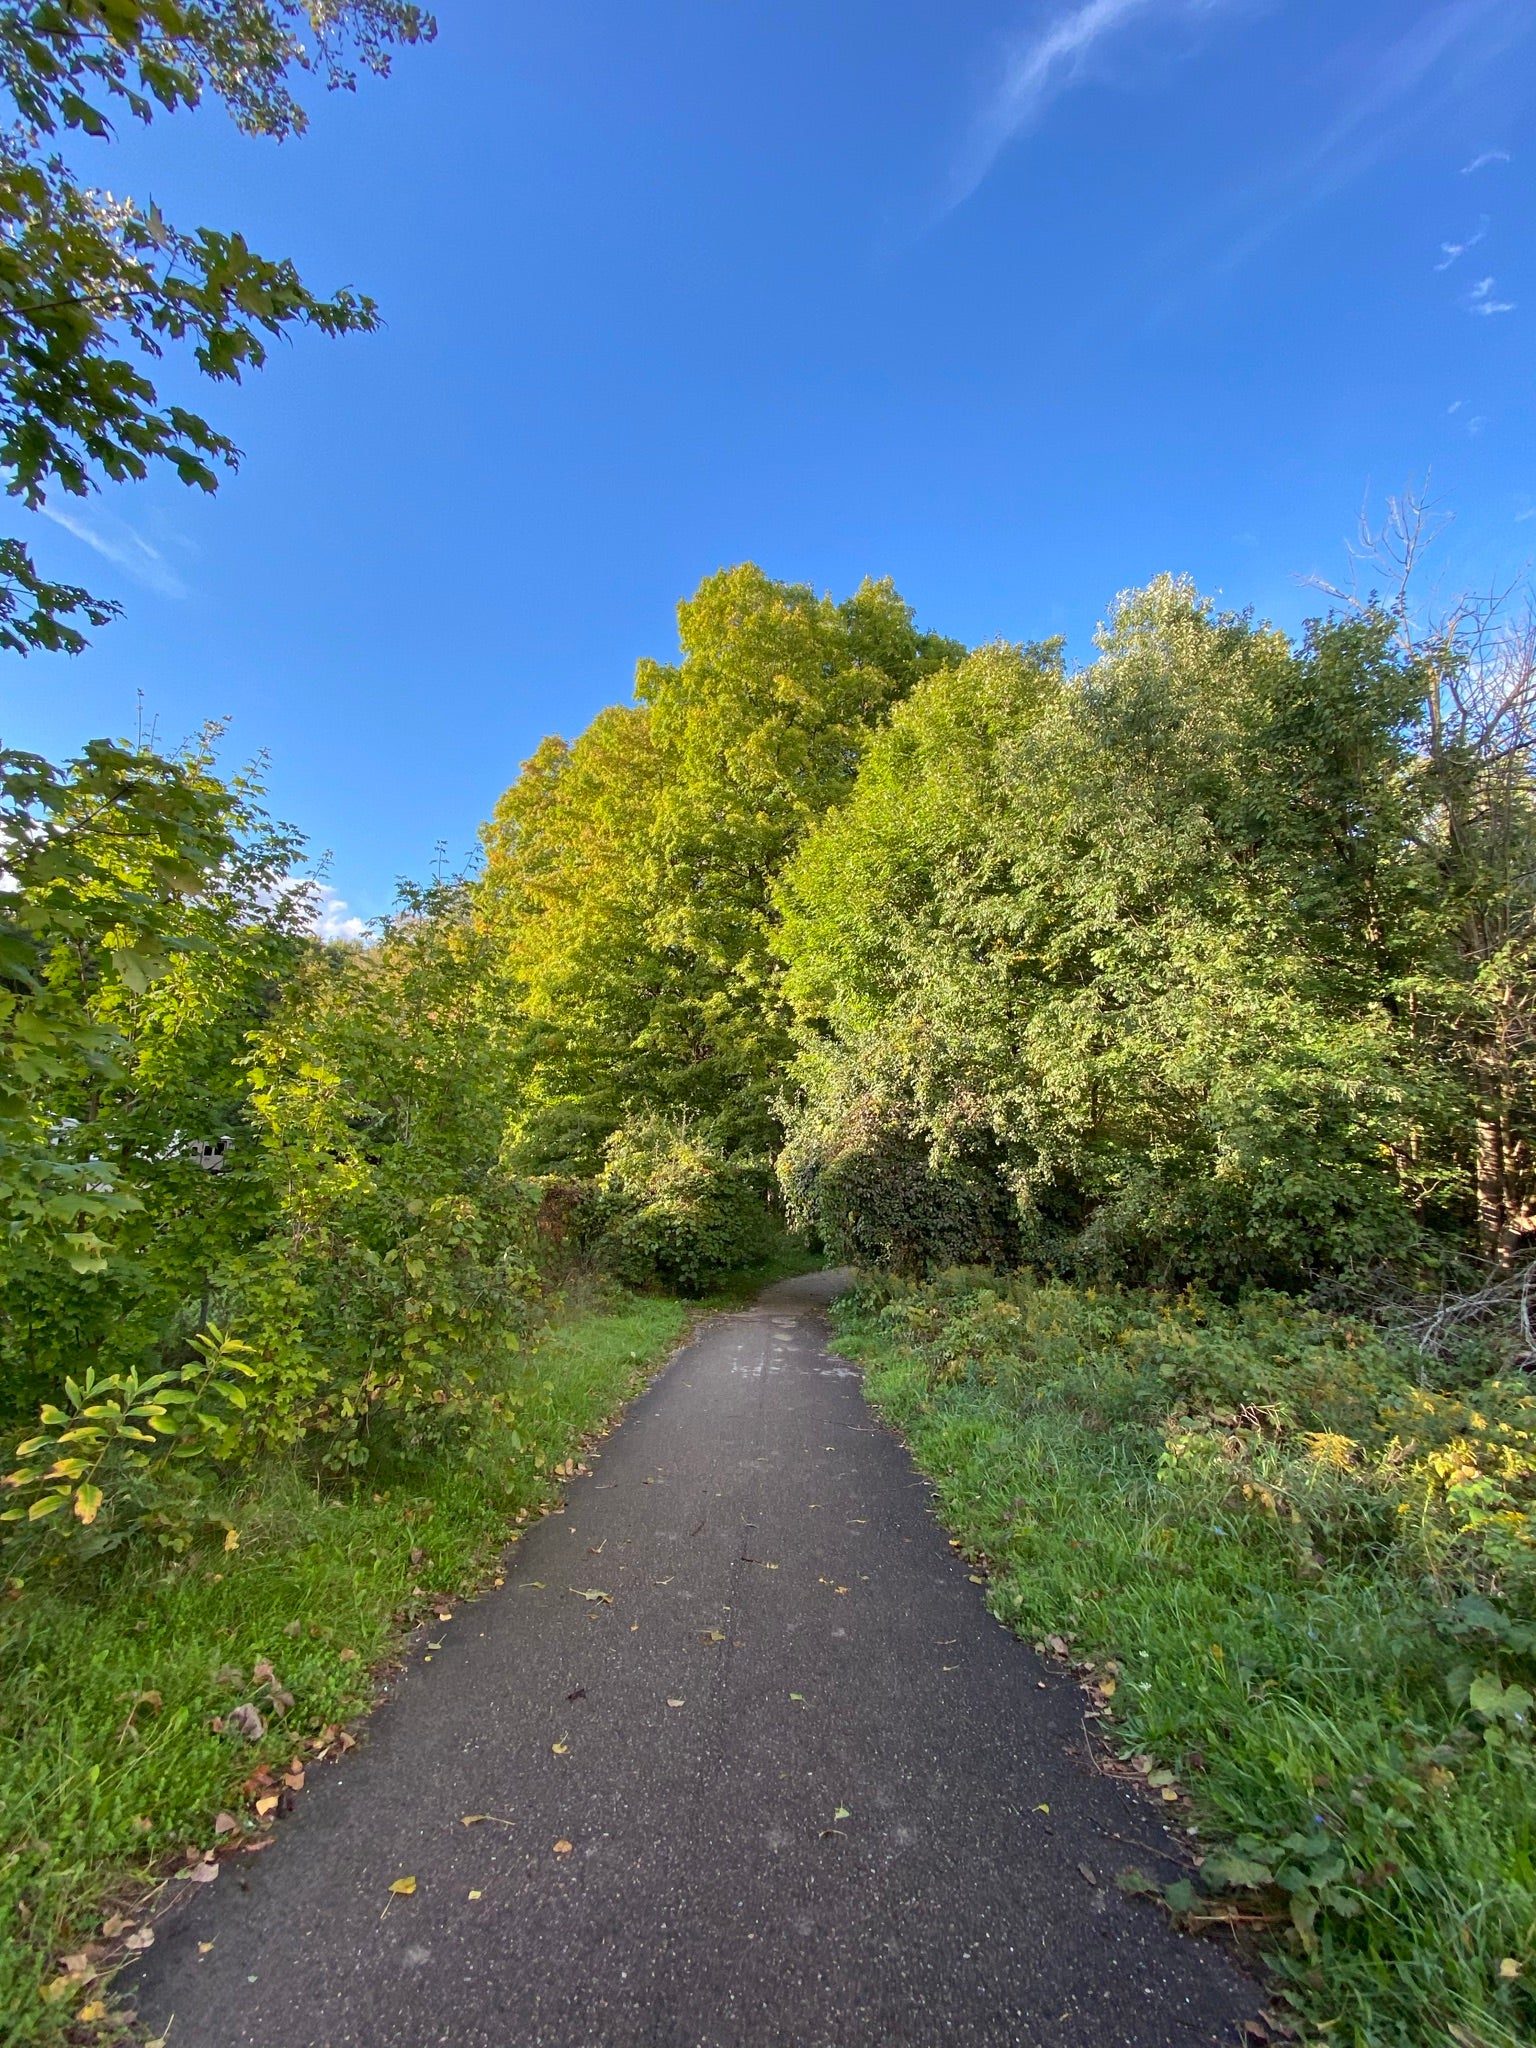 a paved path through greenery